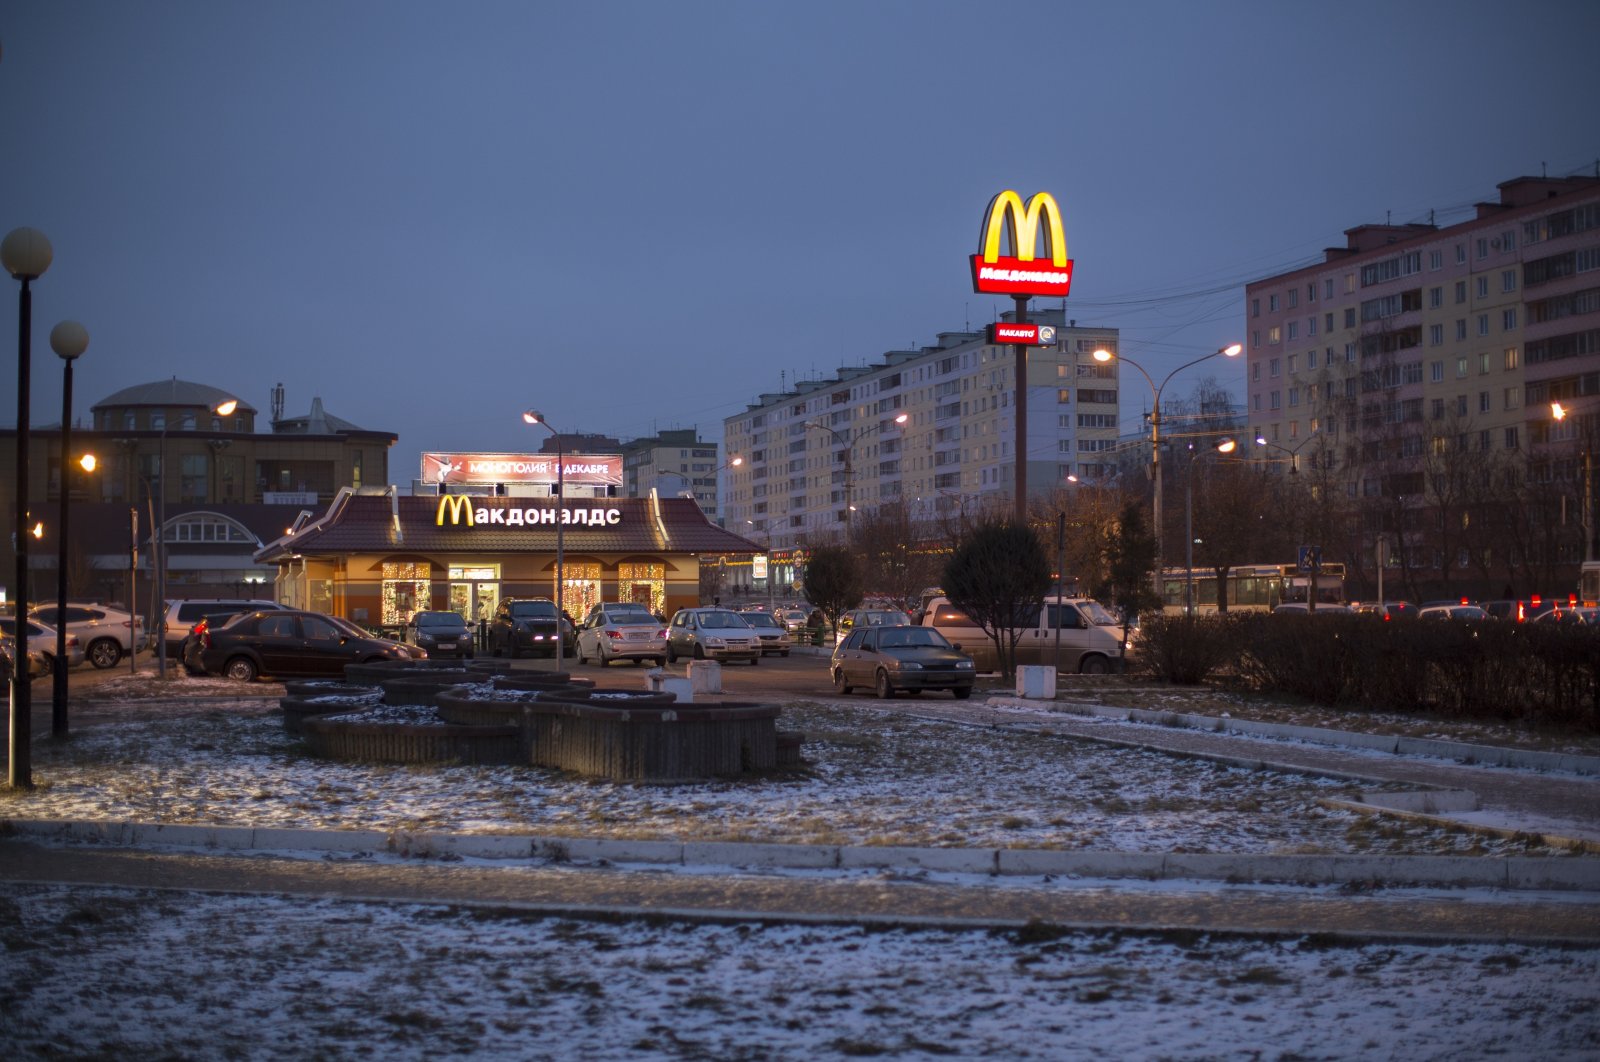 Akhir era: Restoran McDonald’s Rusia terjual